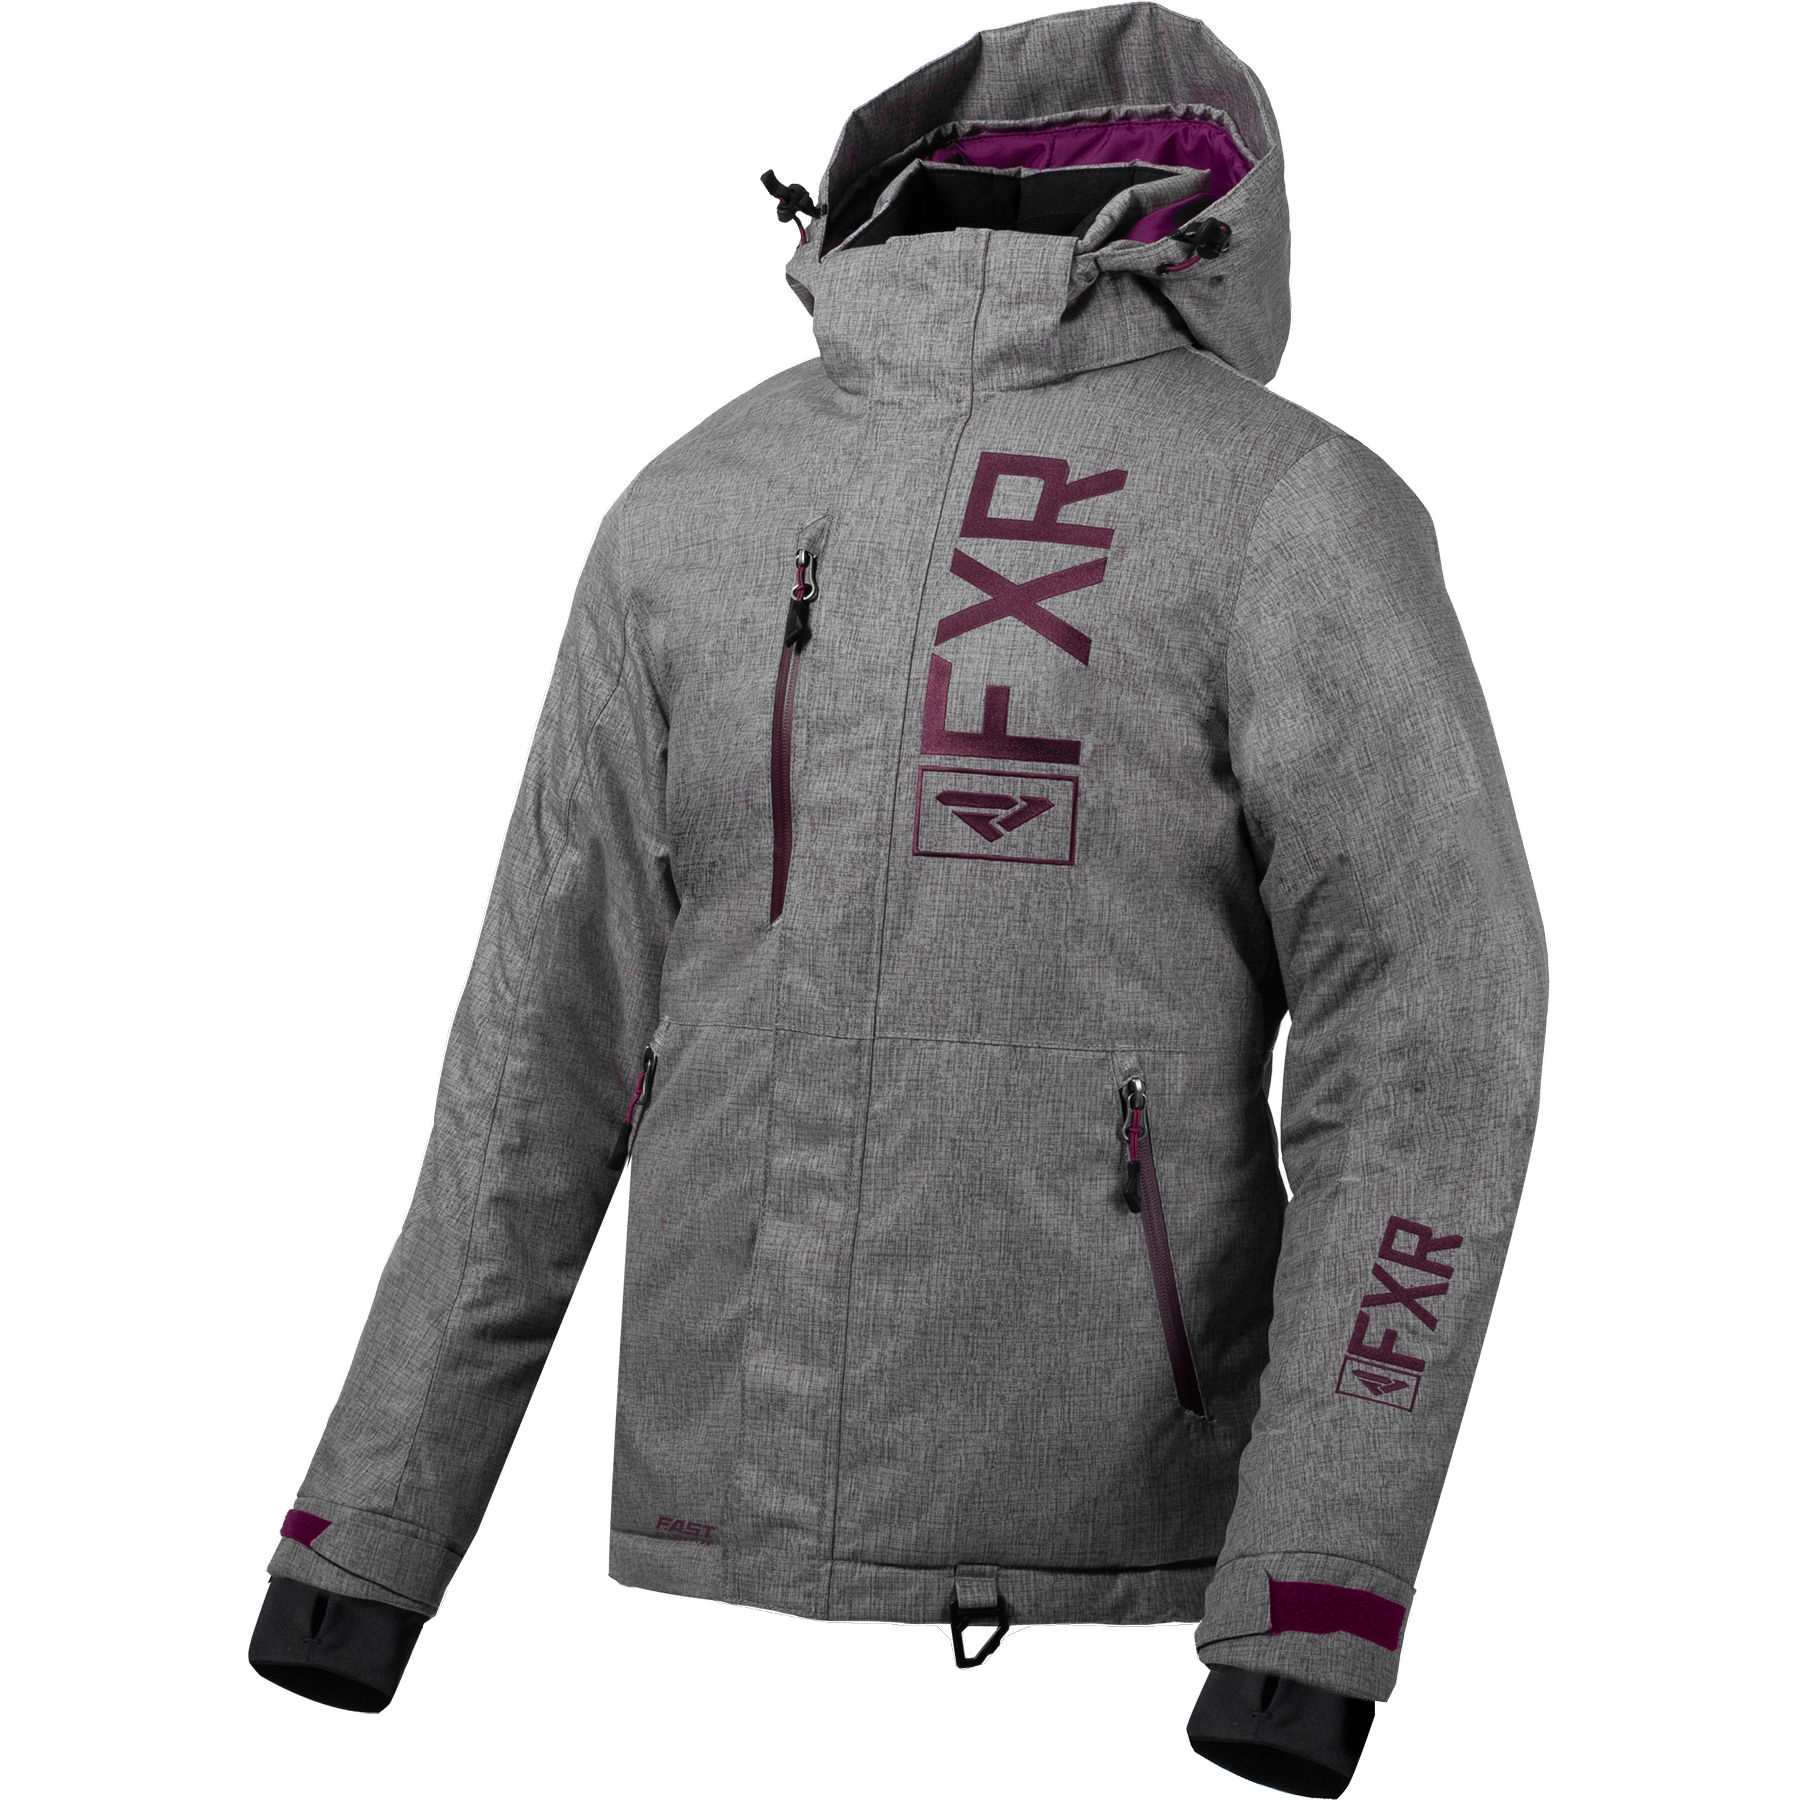 Download FXR Womens Grey Linen/Plum Fresh Jacket Snowmobile 2020 | eBay